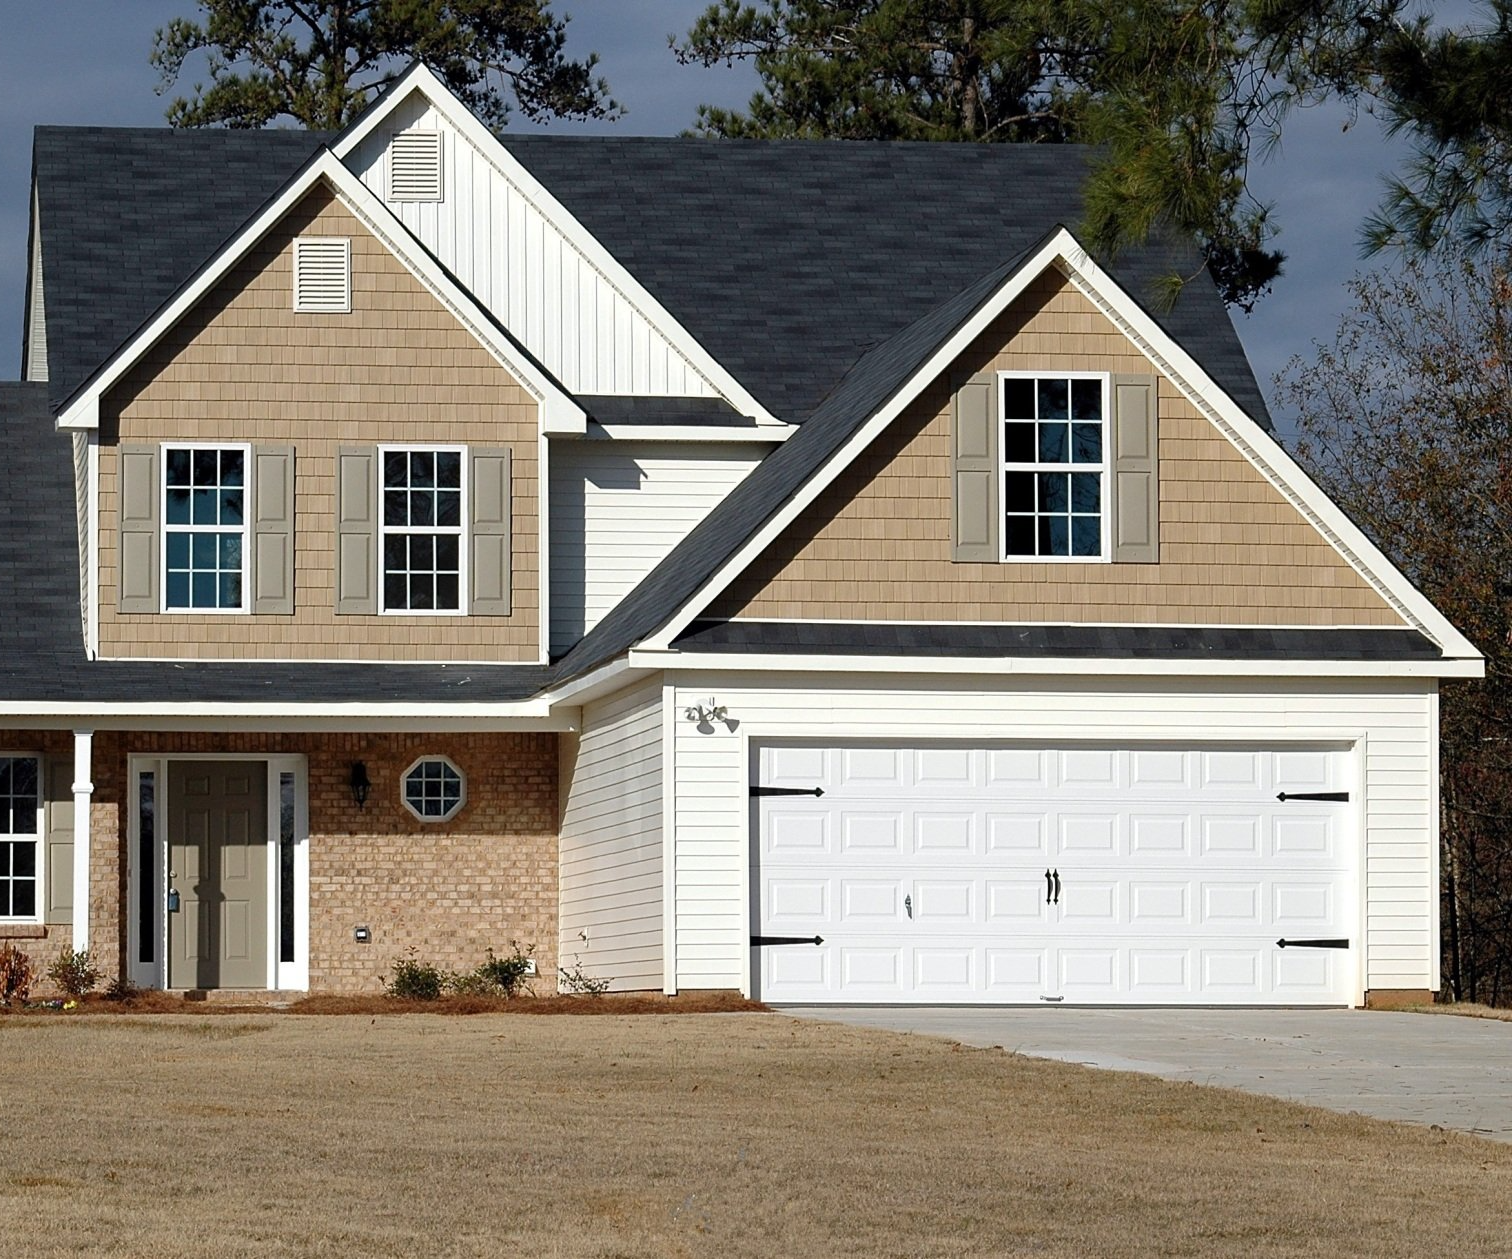 House with wide white garage door